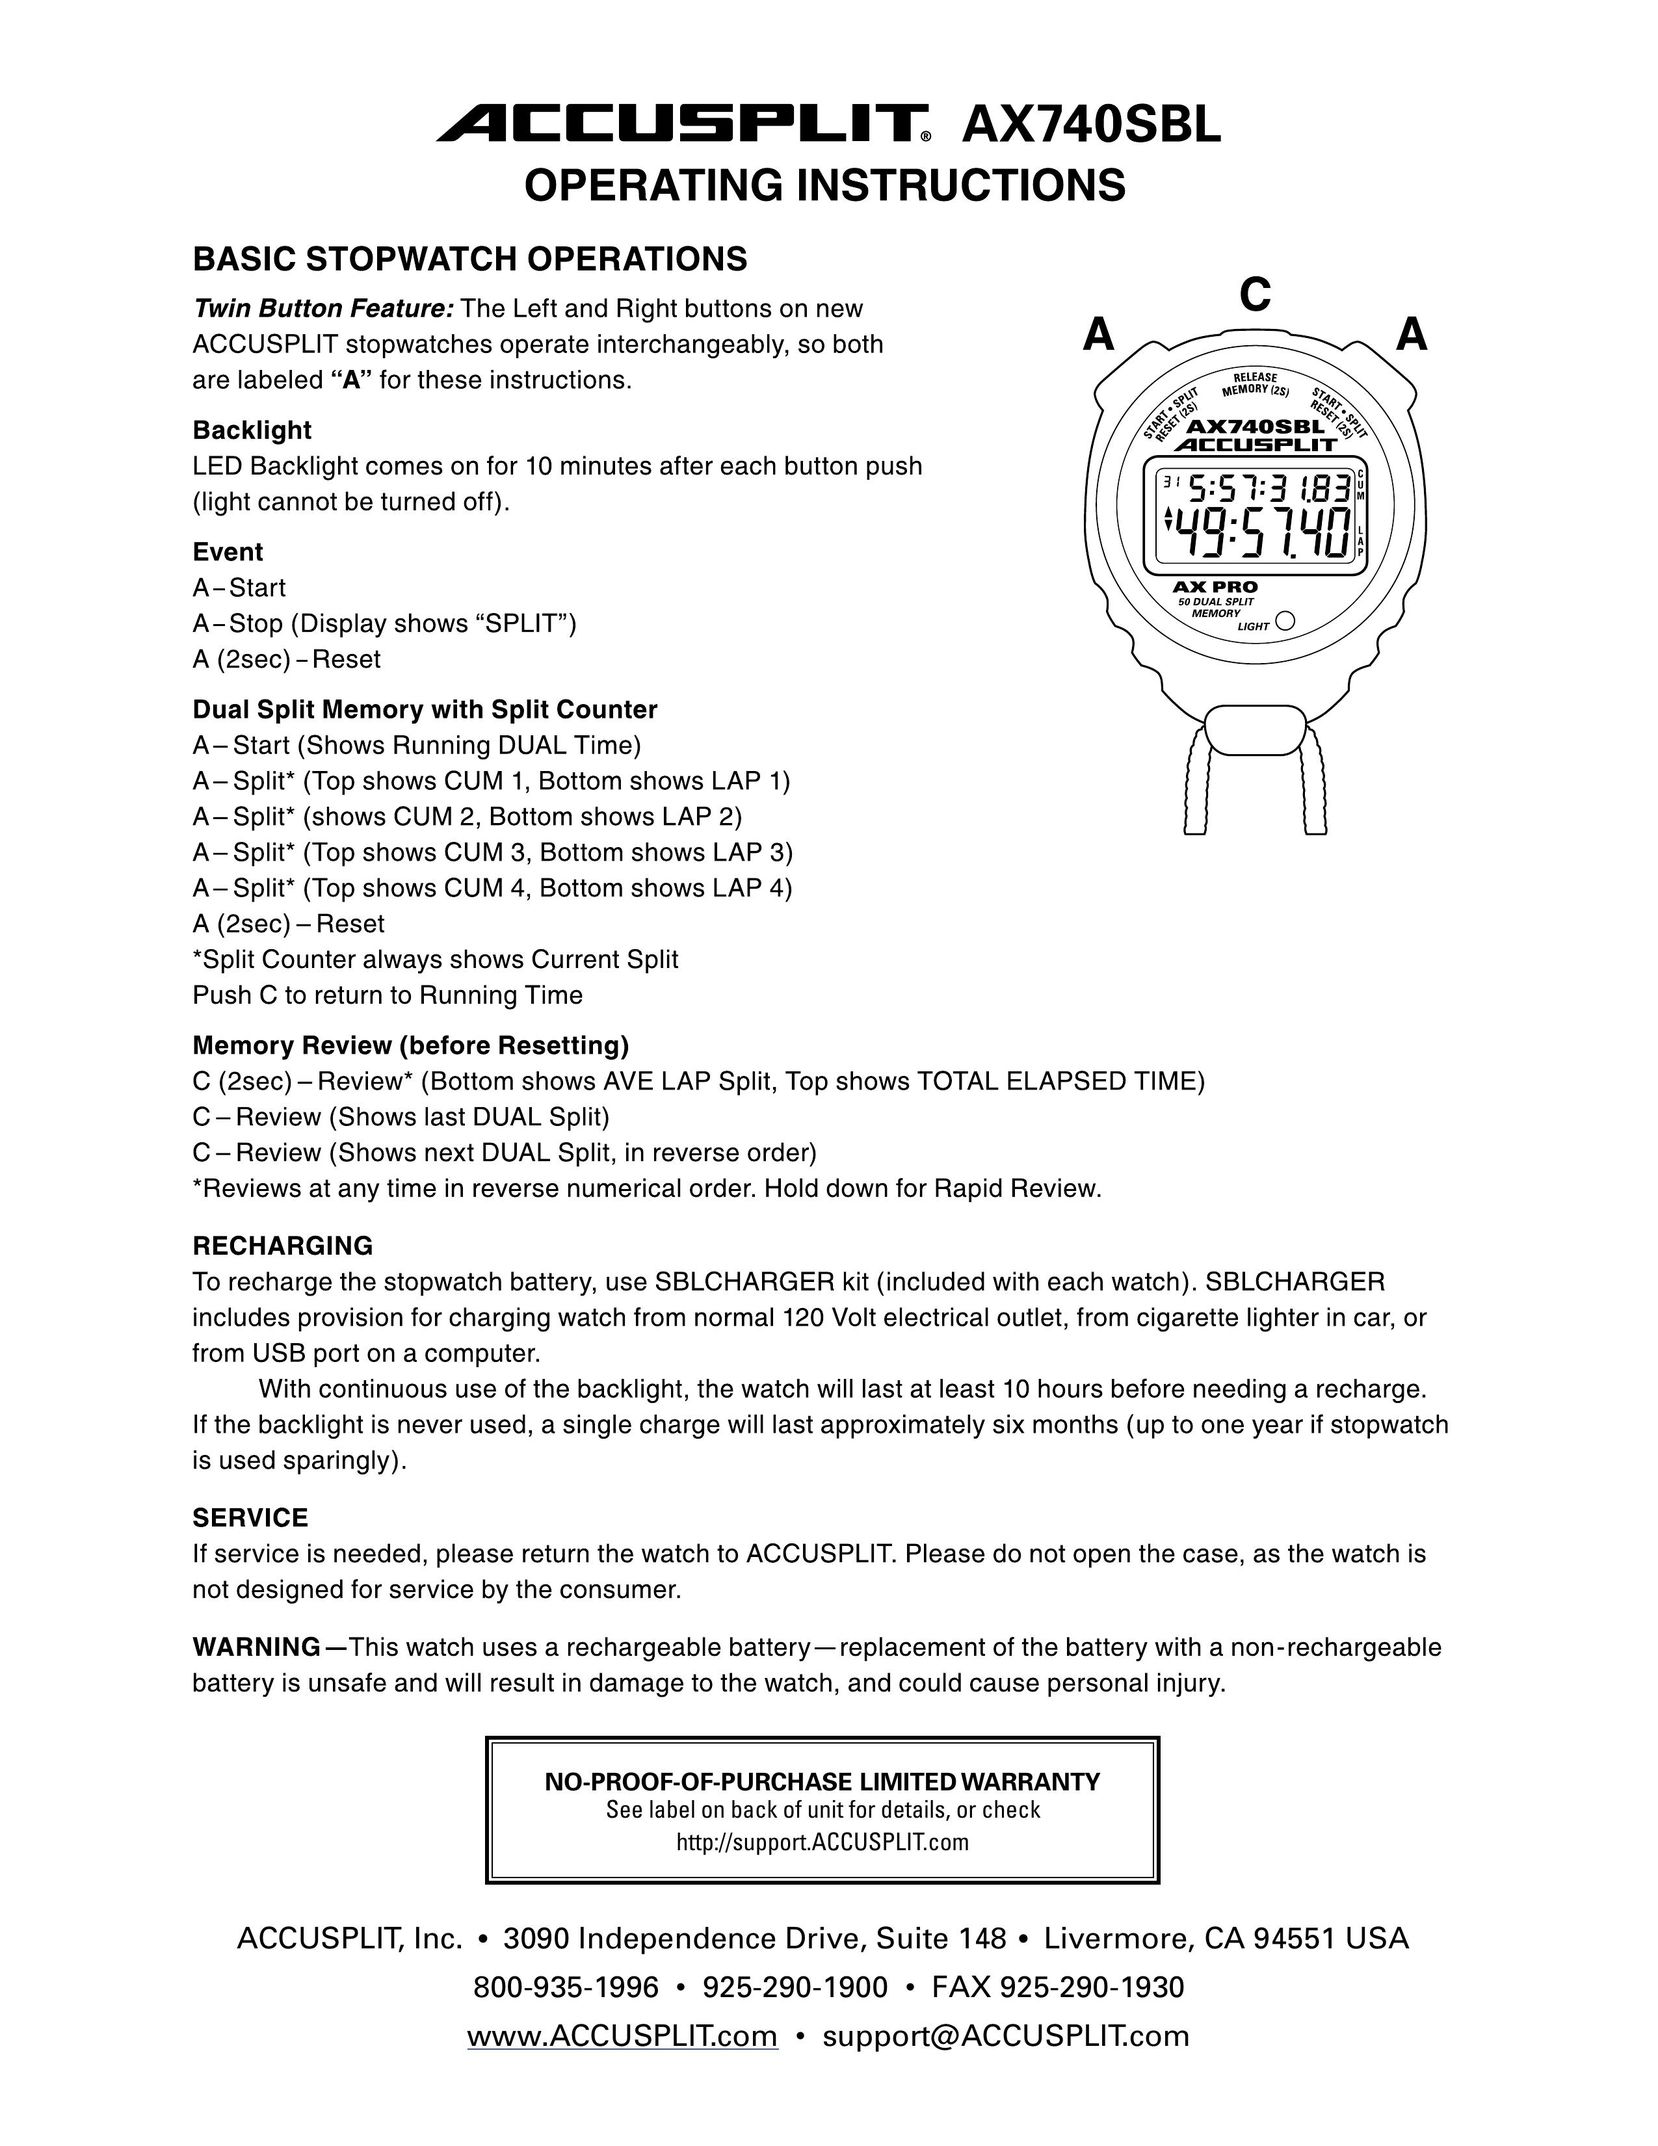 Accusplit AX740SBL Heart Rate Monitor User Manual